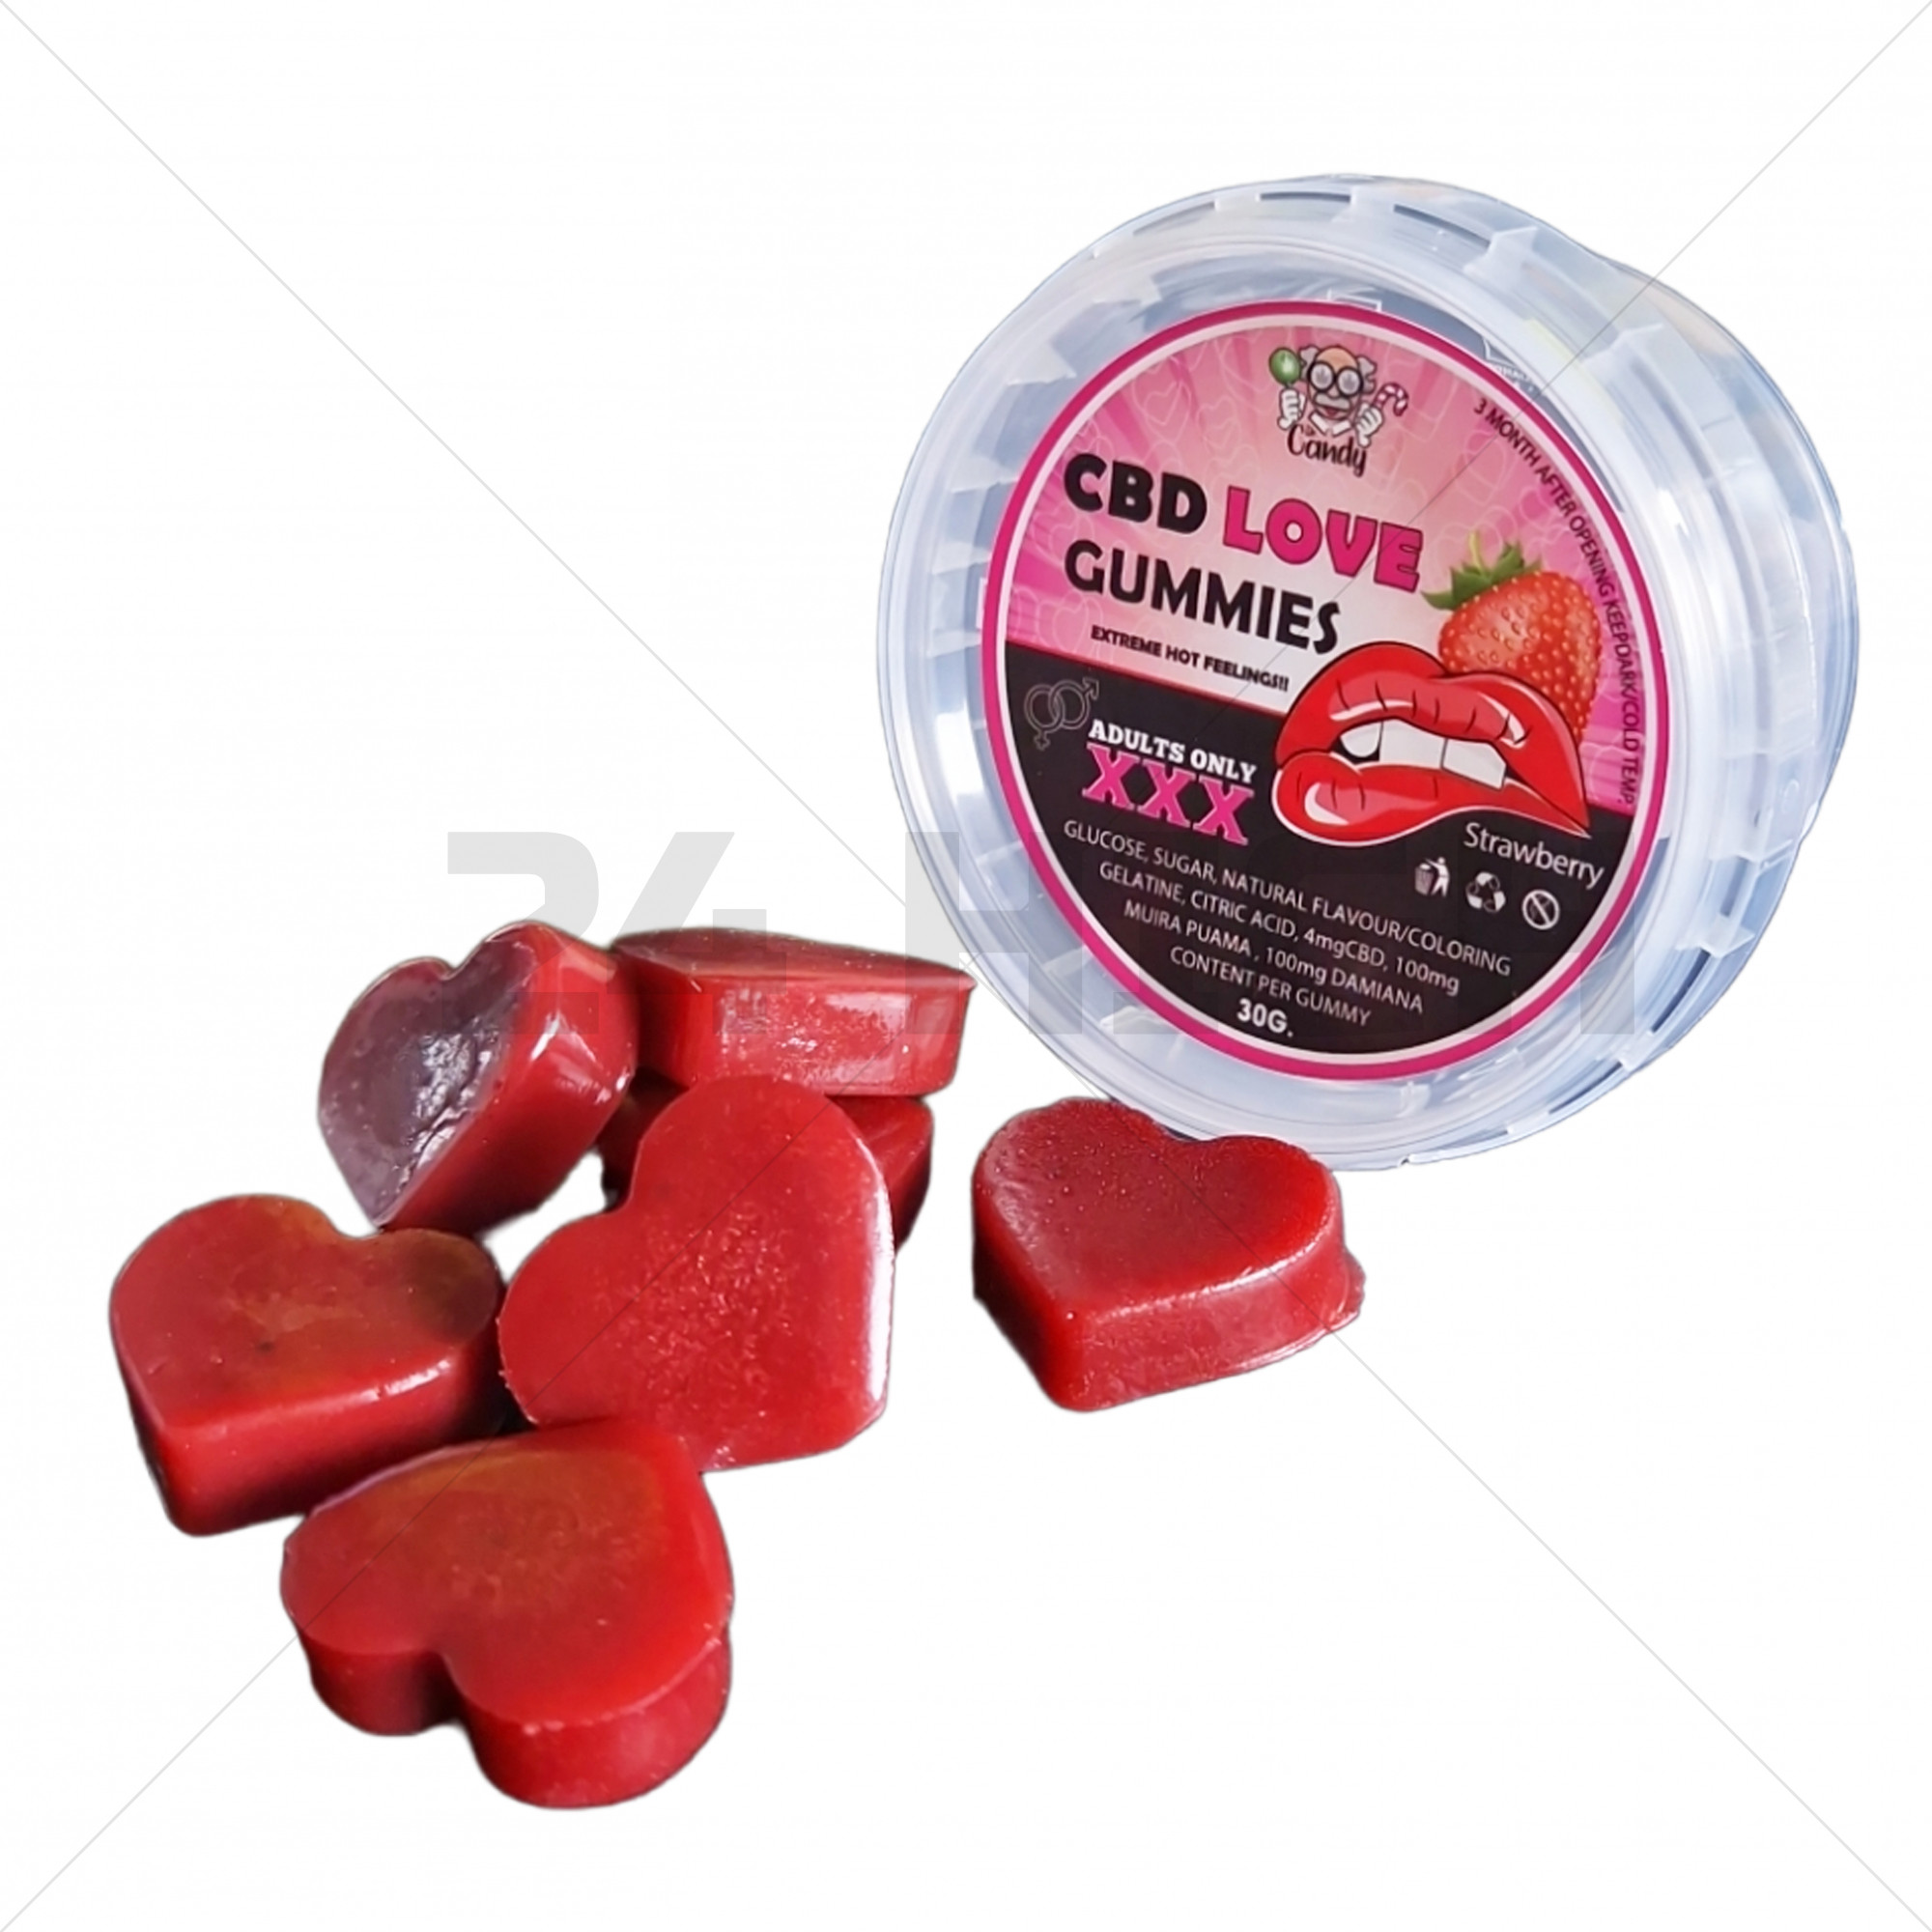  CBD Love Gummies